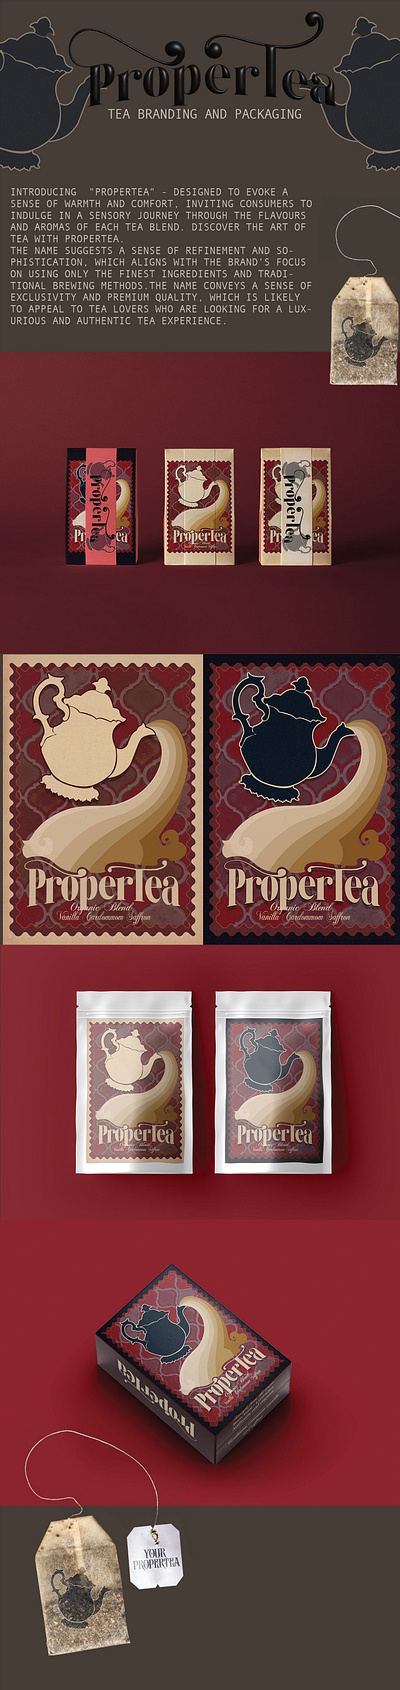 ProperTea- Tea branding adobe illustrator adobeillustrator branding brandingandpackaging brandingidentity logo logodesign packaging packagingdesign visualidentity